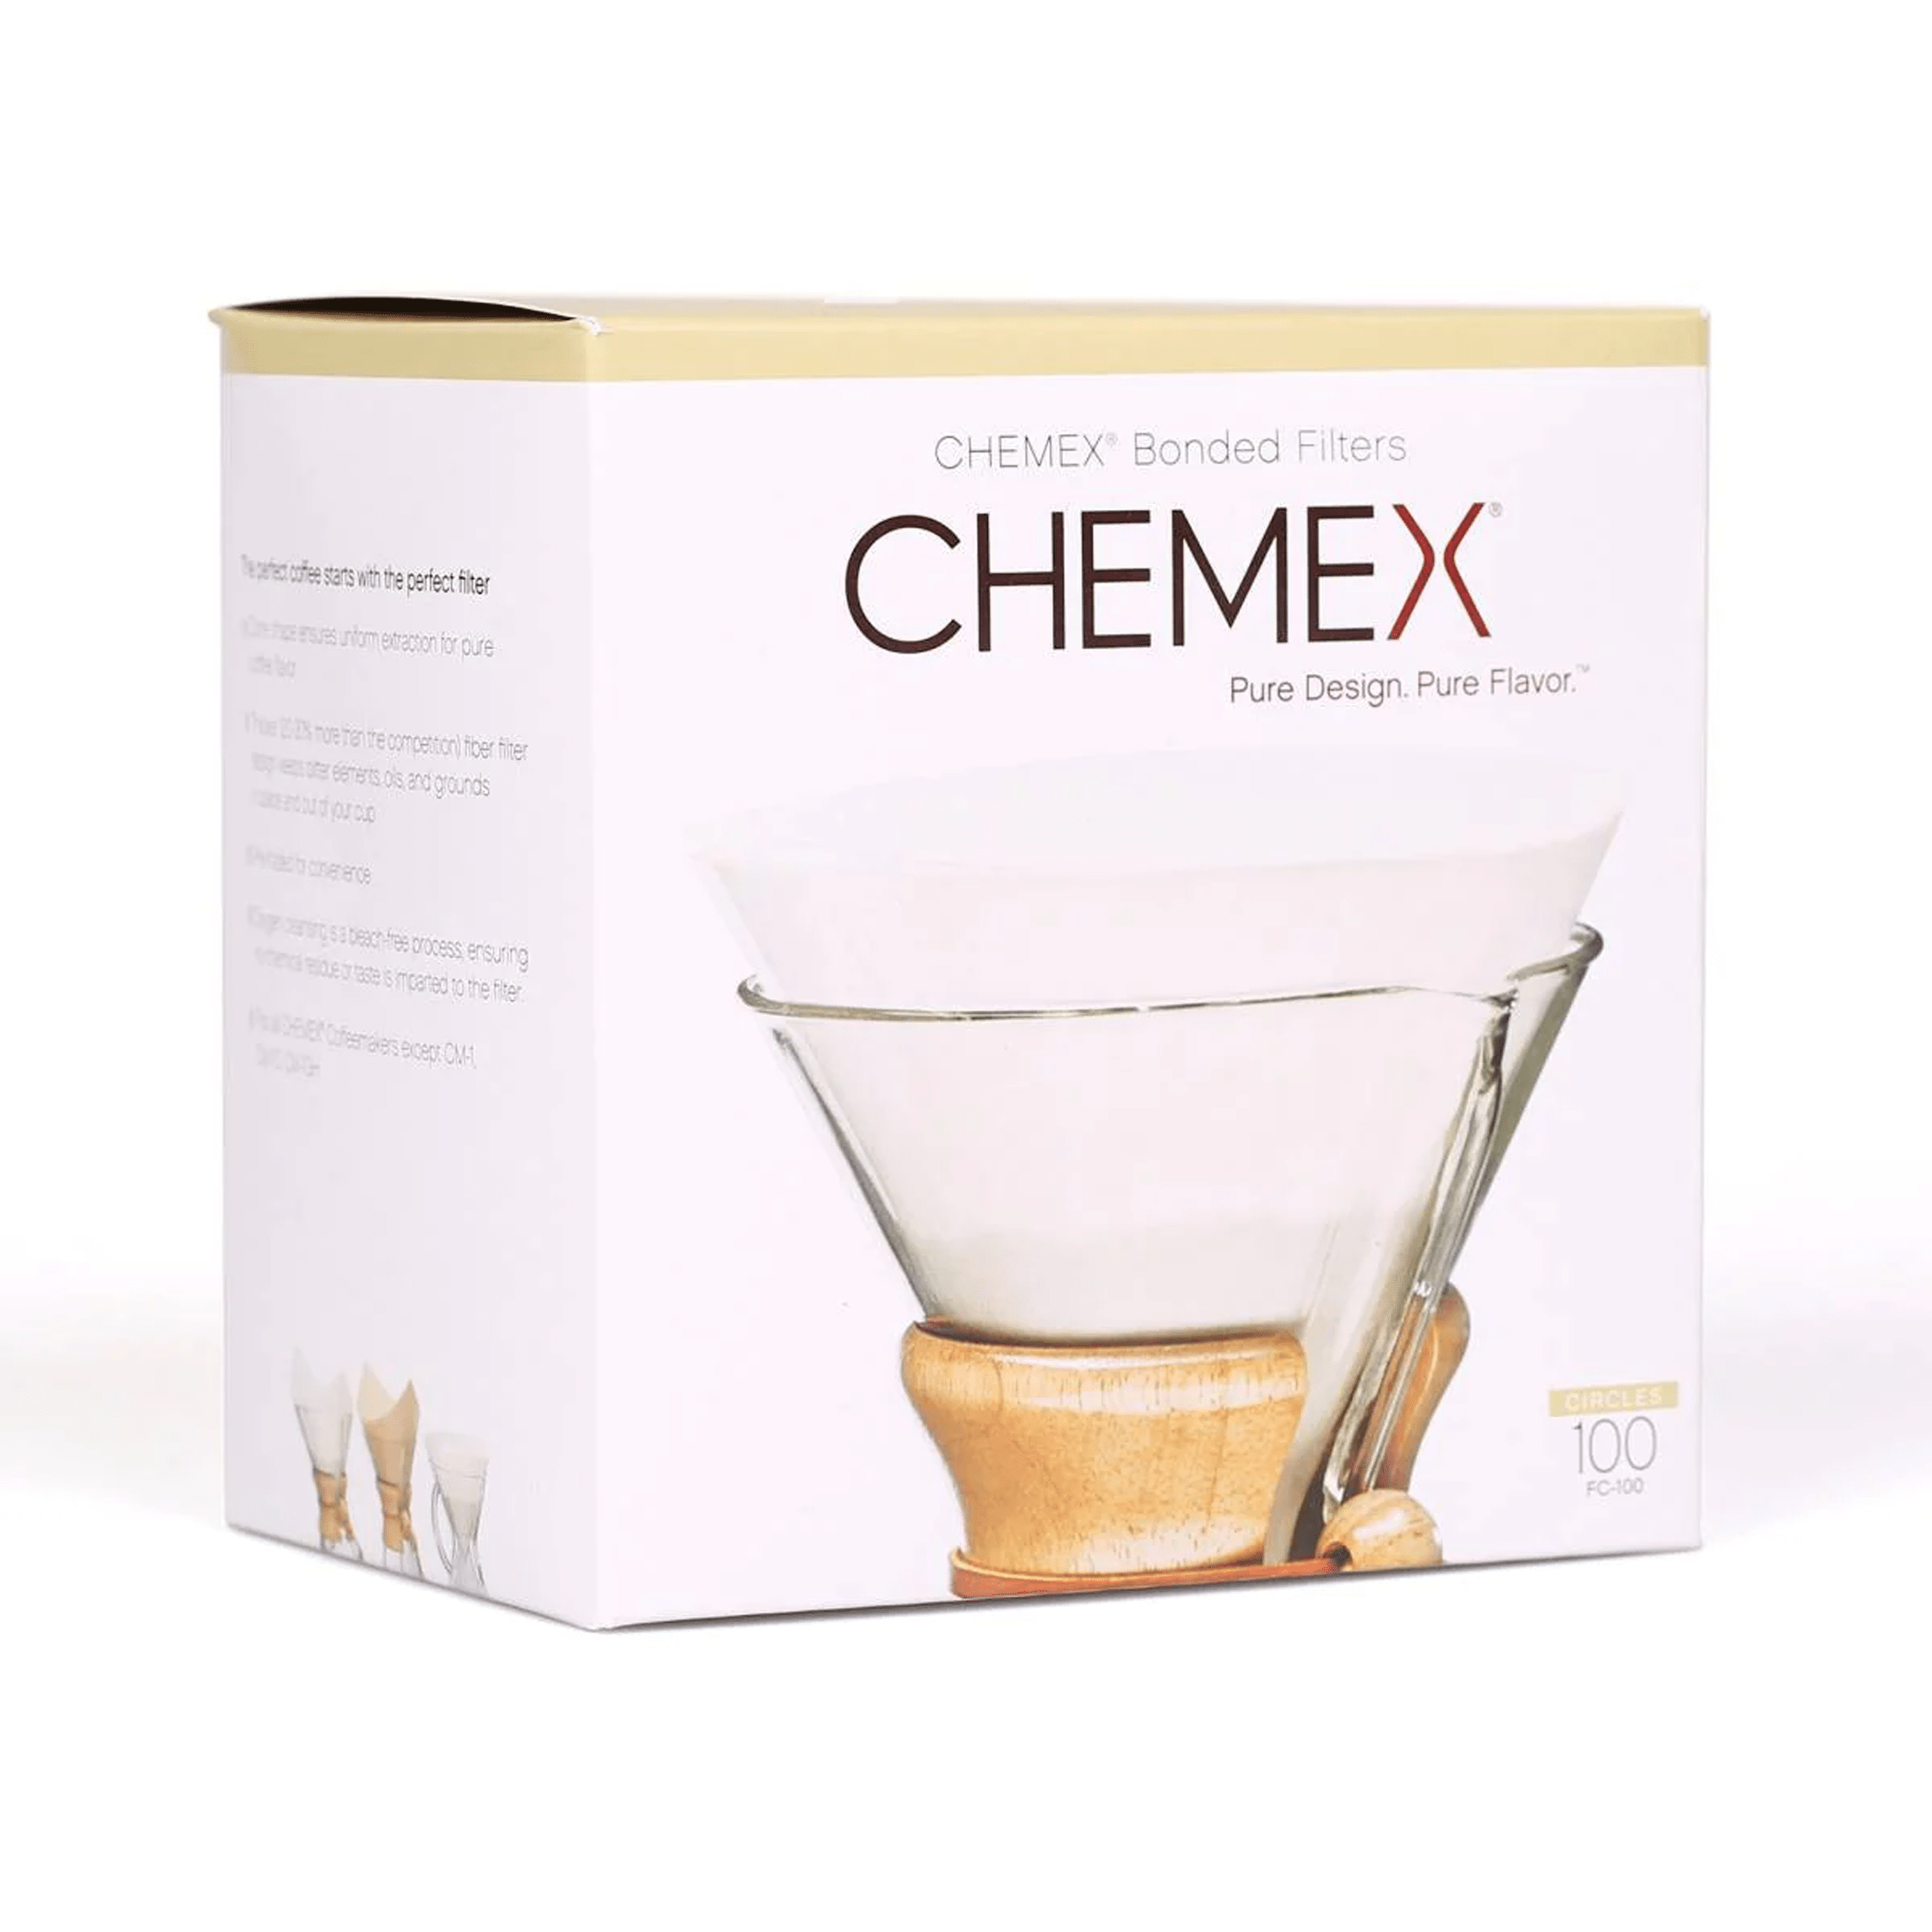 Chemex Filterpapier | 100 Kaffeefilter für Chemexkaraffe